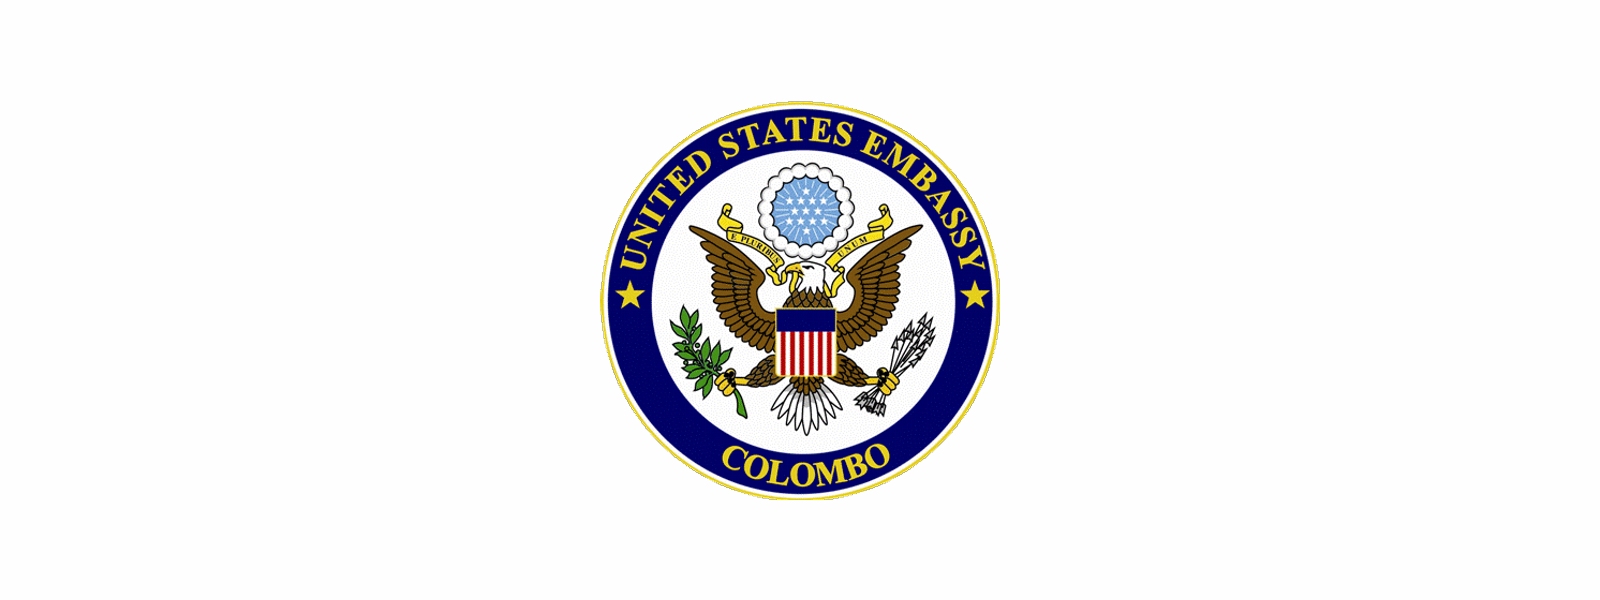 US Embassy issues alert regarding economic situation